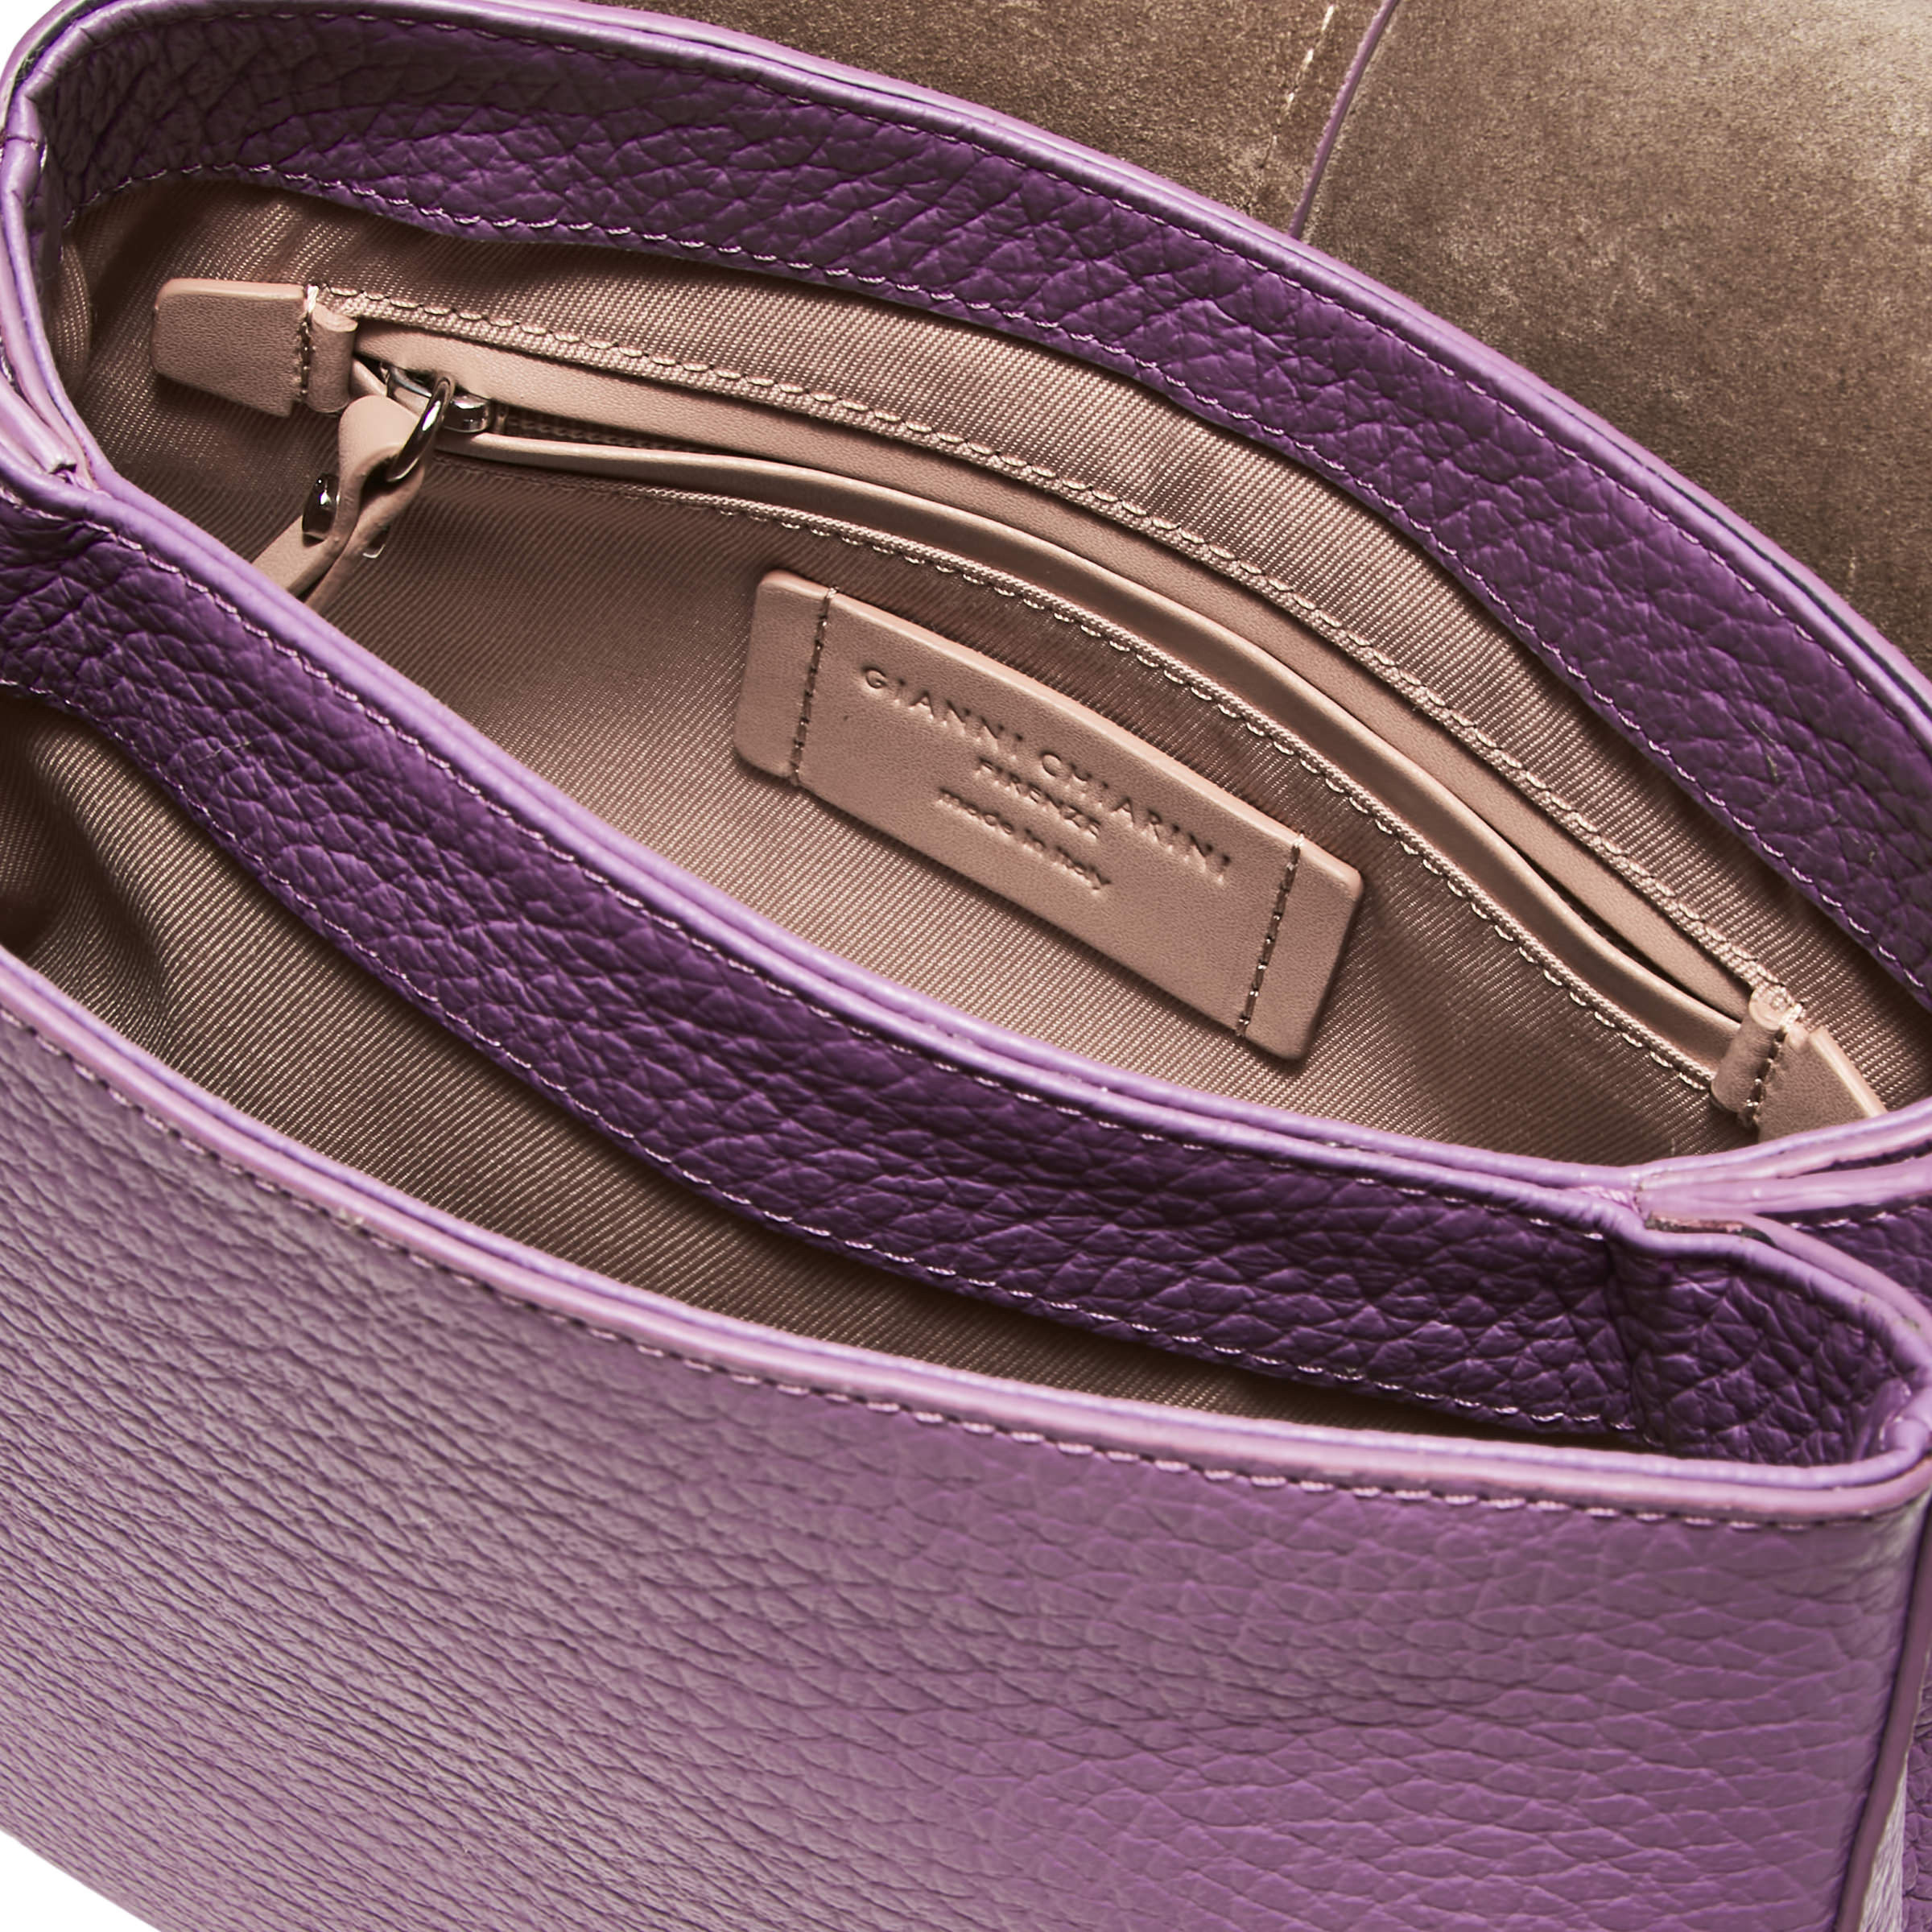 Gianni Chiarini - Helena Round bag in leather, Purple Wisteria, large image number 4